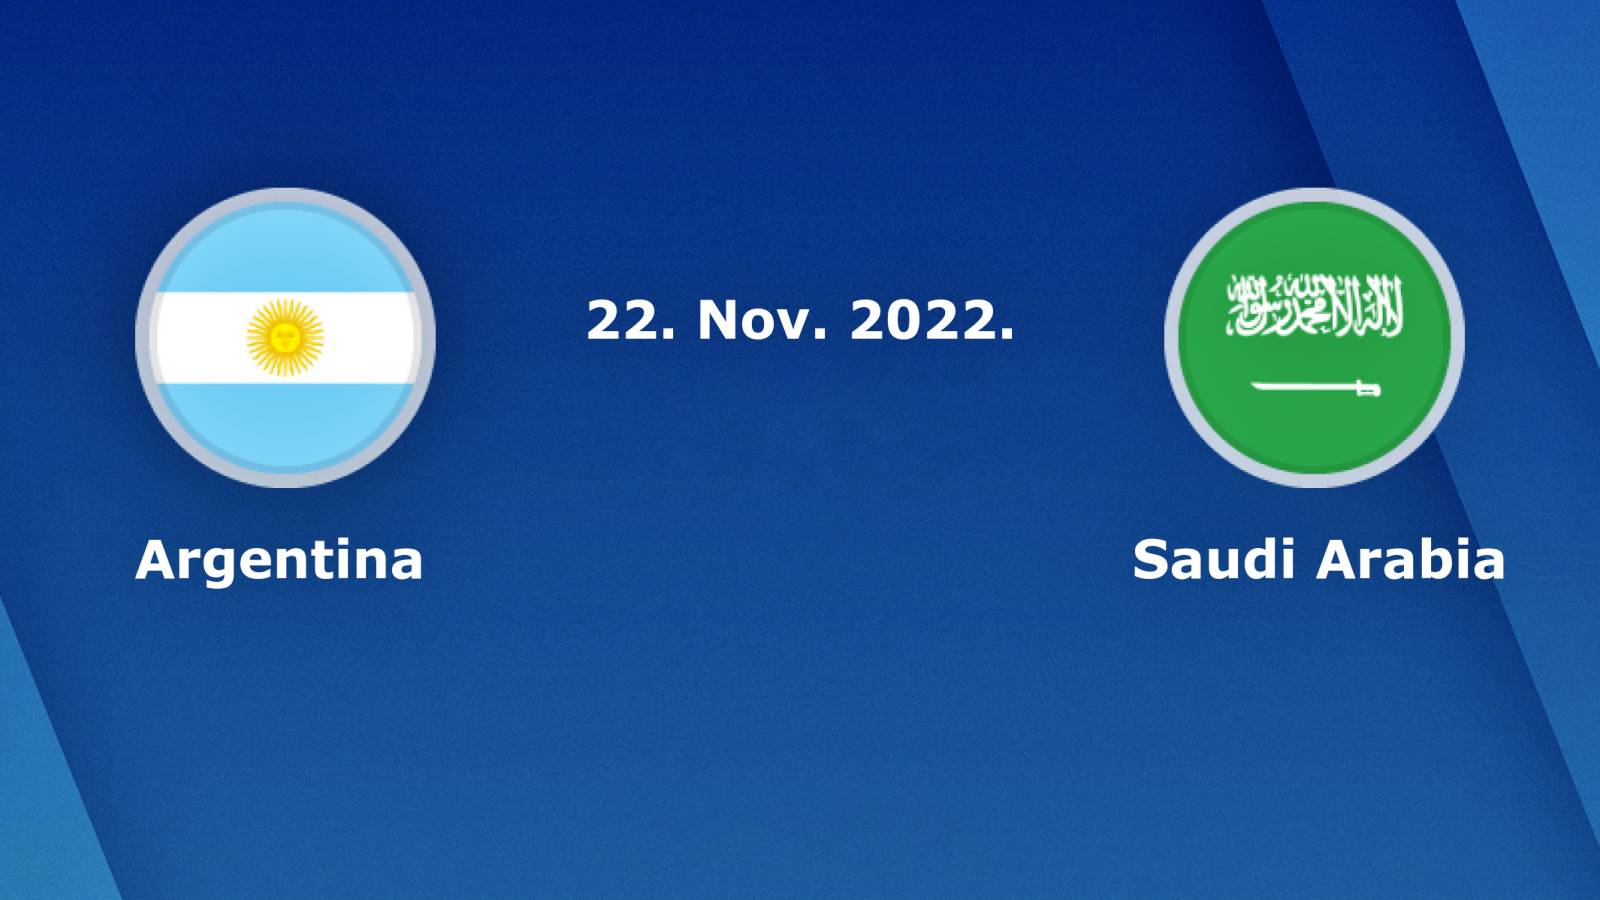 ARGENTINA – ARABIA SAUDITA LIVE TVR 1 MECI CAMPIONATUL MONDIAL 2022 QATAR